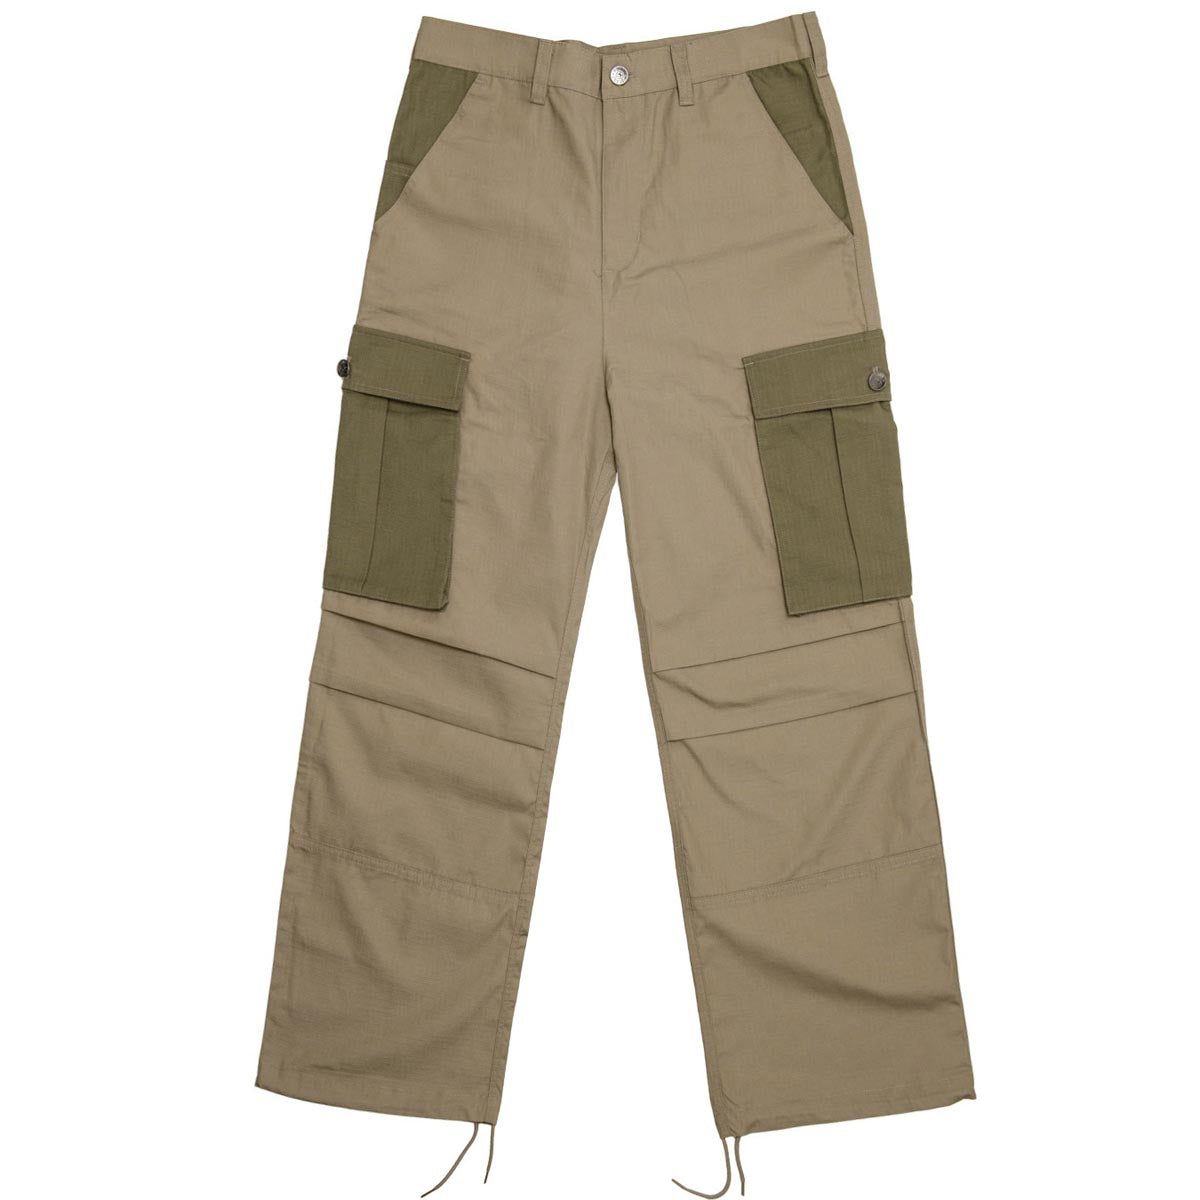 Hoddle Pleated Rip Stop Cargo Pants - Tan/Khaki image 1